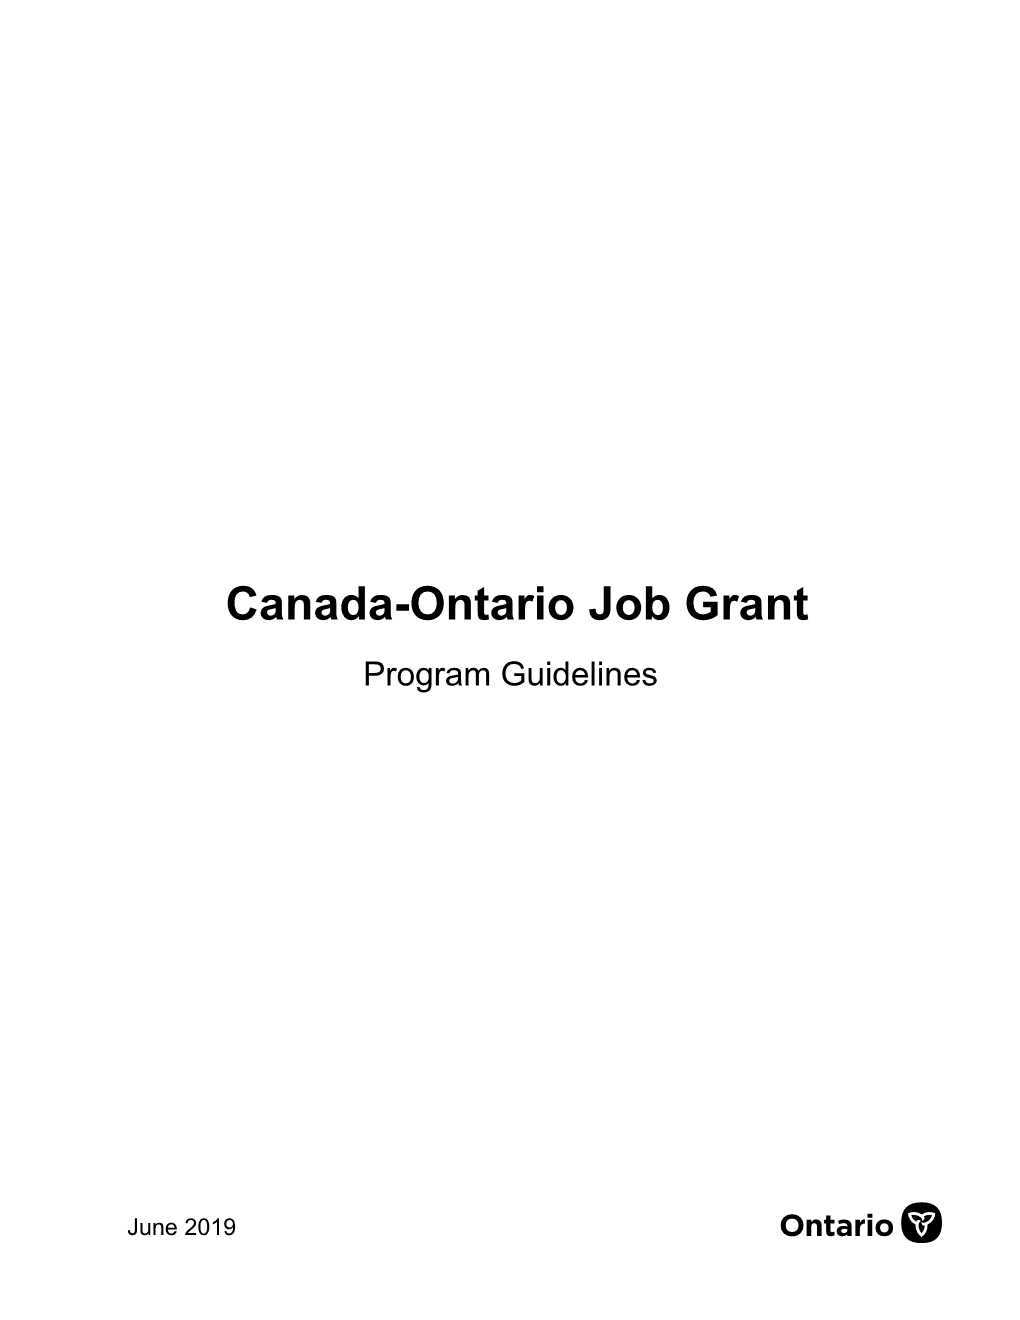 Canada-Ontario Job Grant Program Guidelines